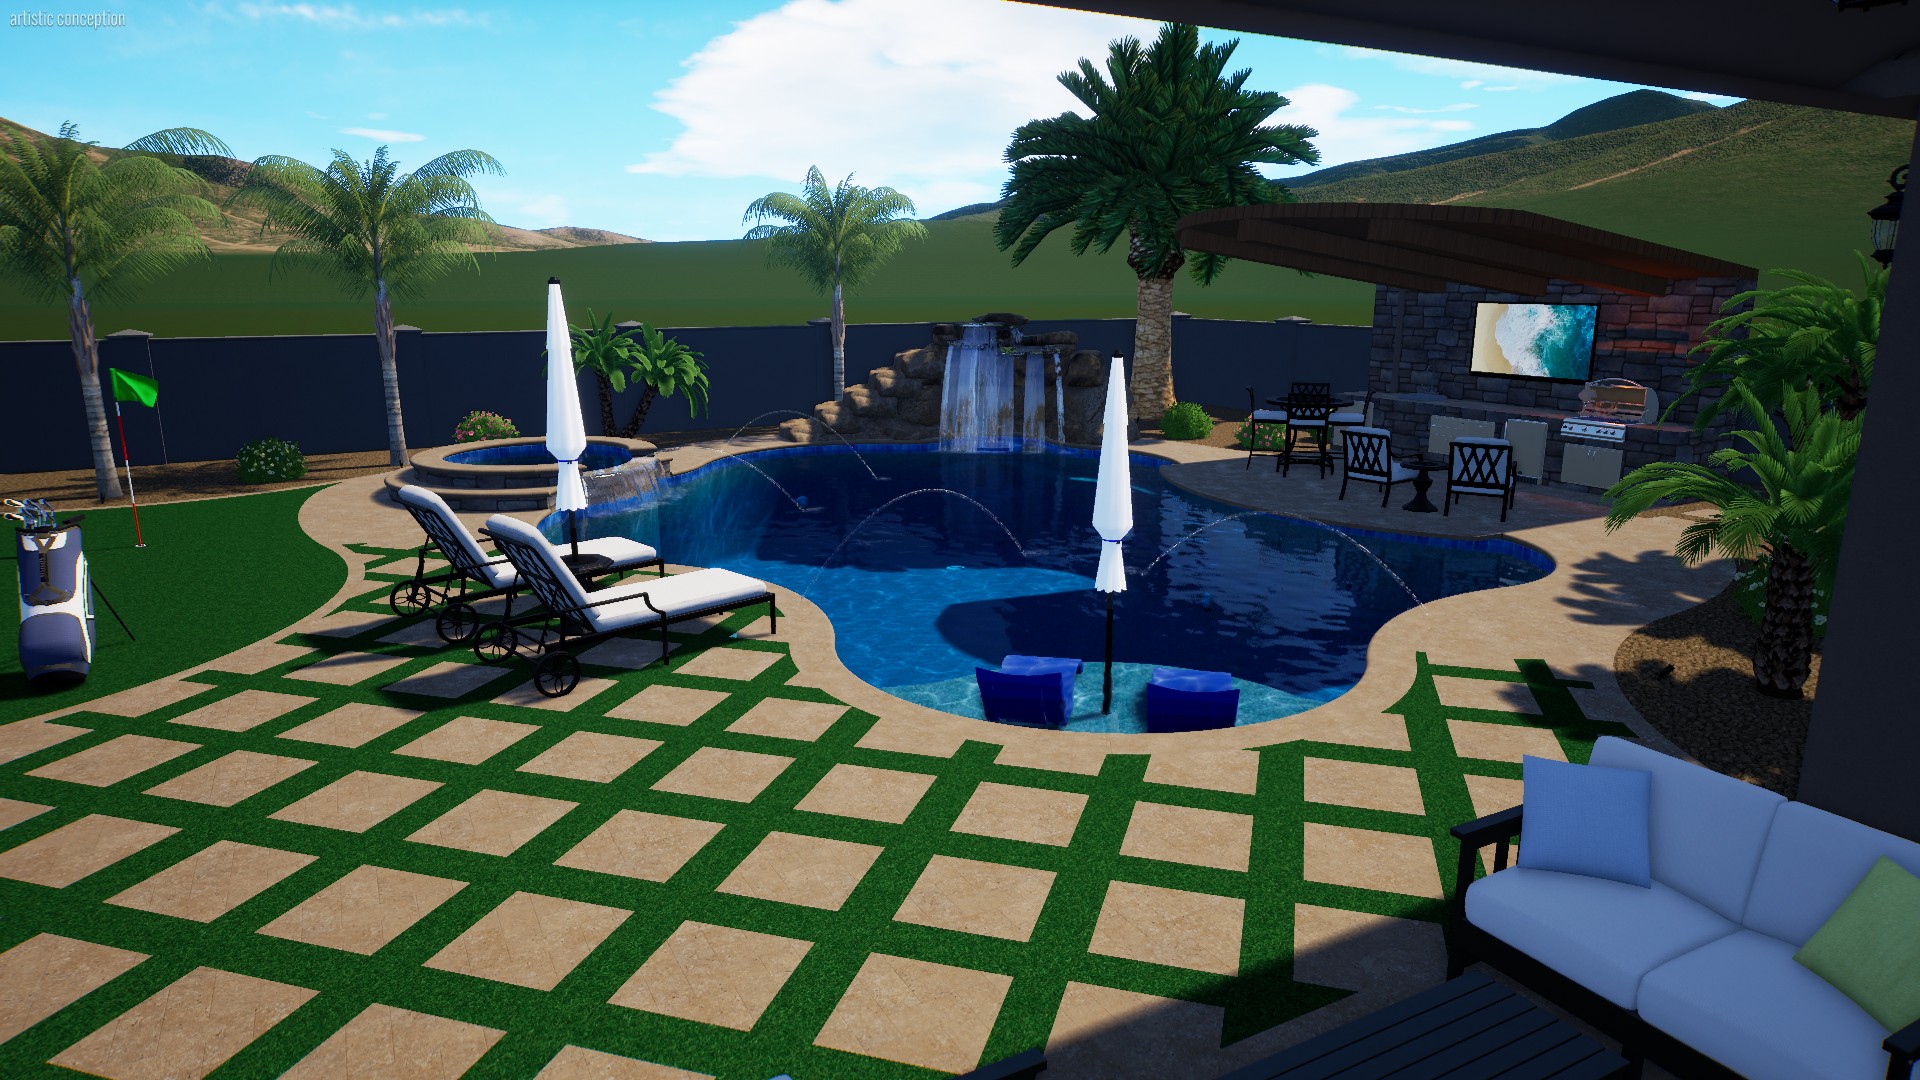 3D Outdoor Living Pool and Landscape Design No Limit Pools & Spas Mesa (602)421-9379